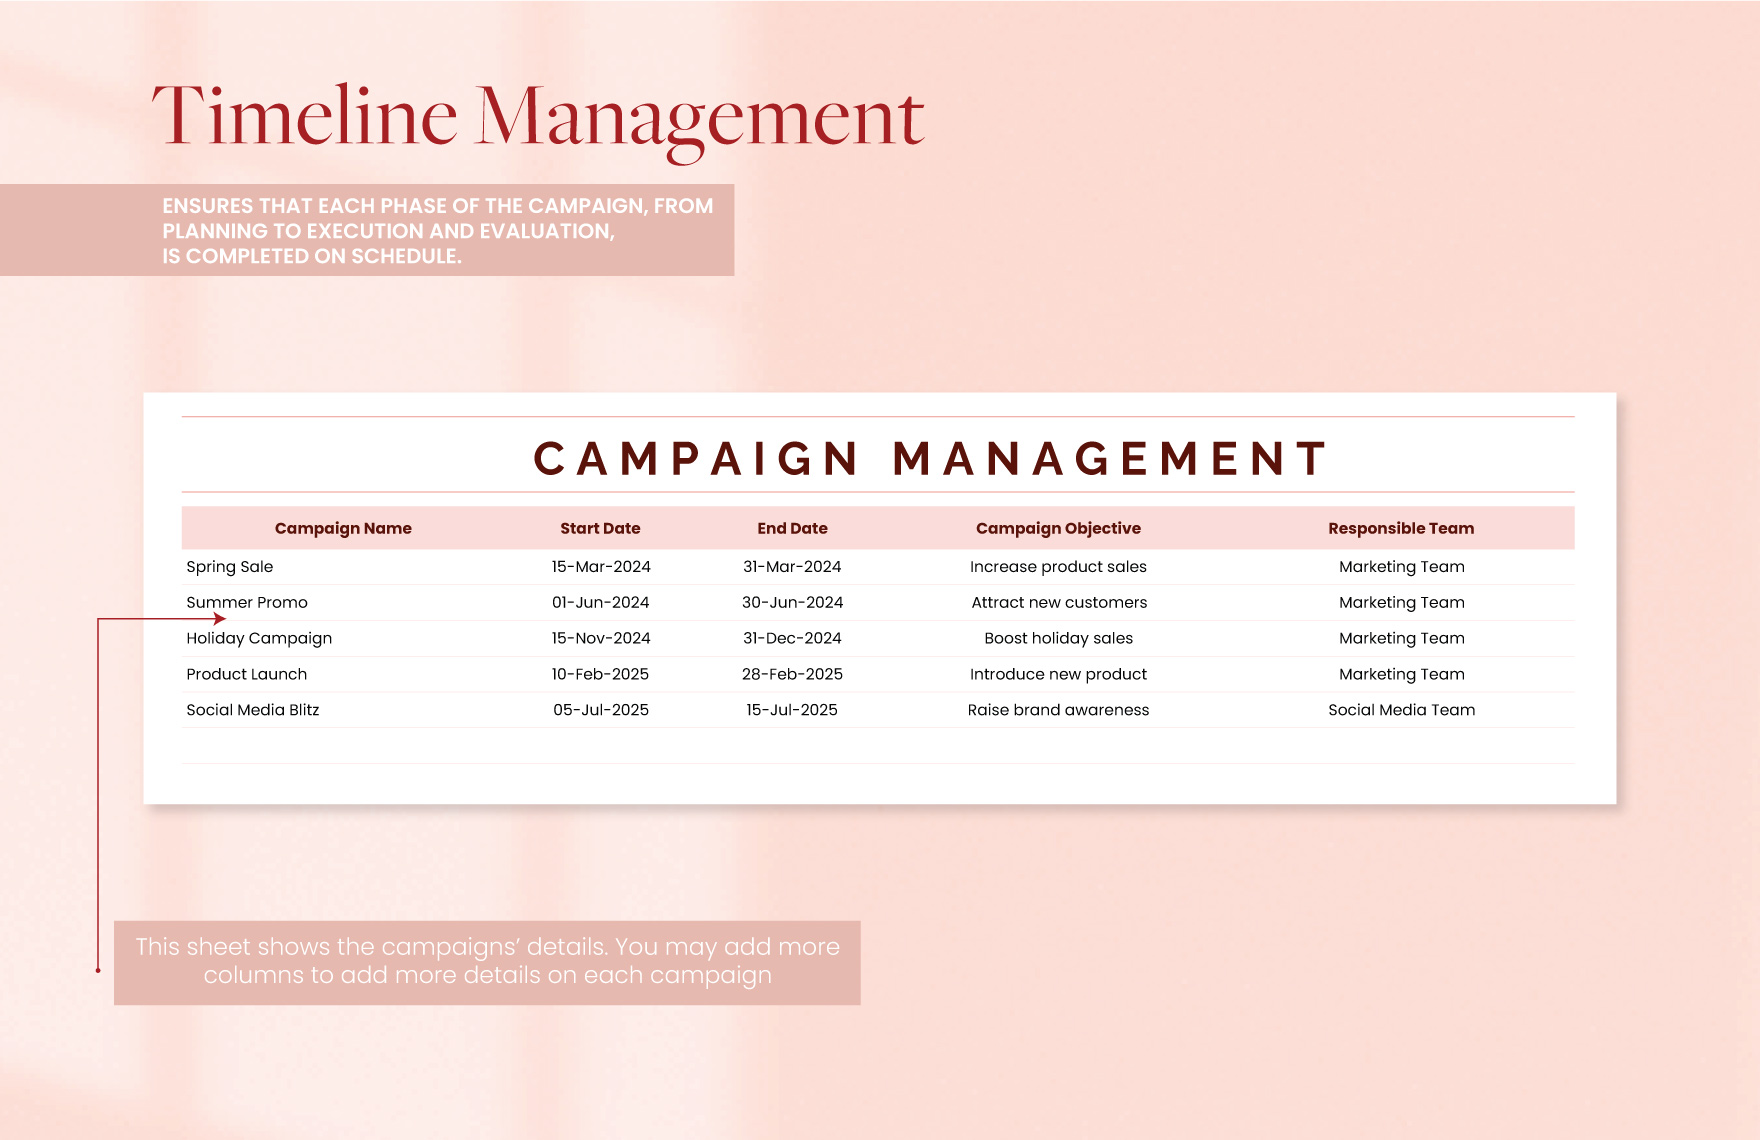 Marketing Campaign Schedule Template